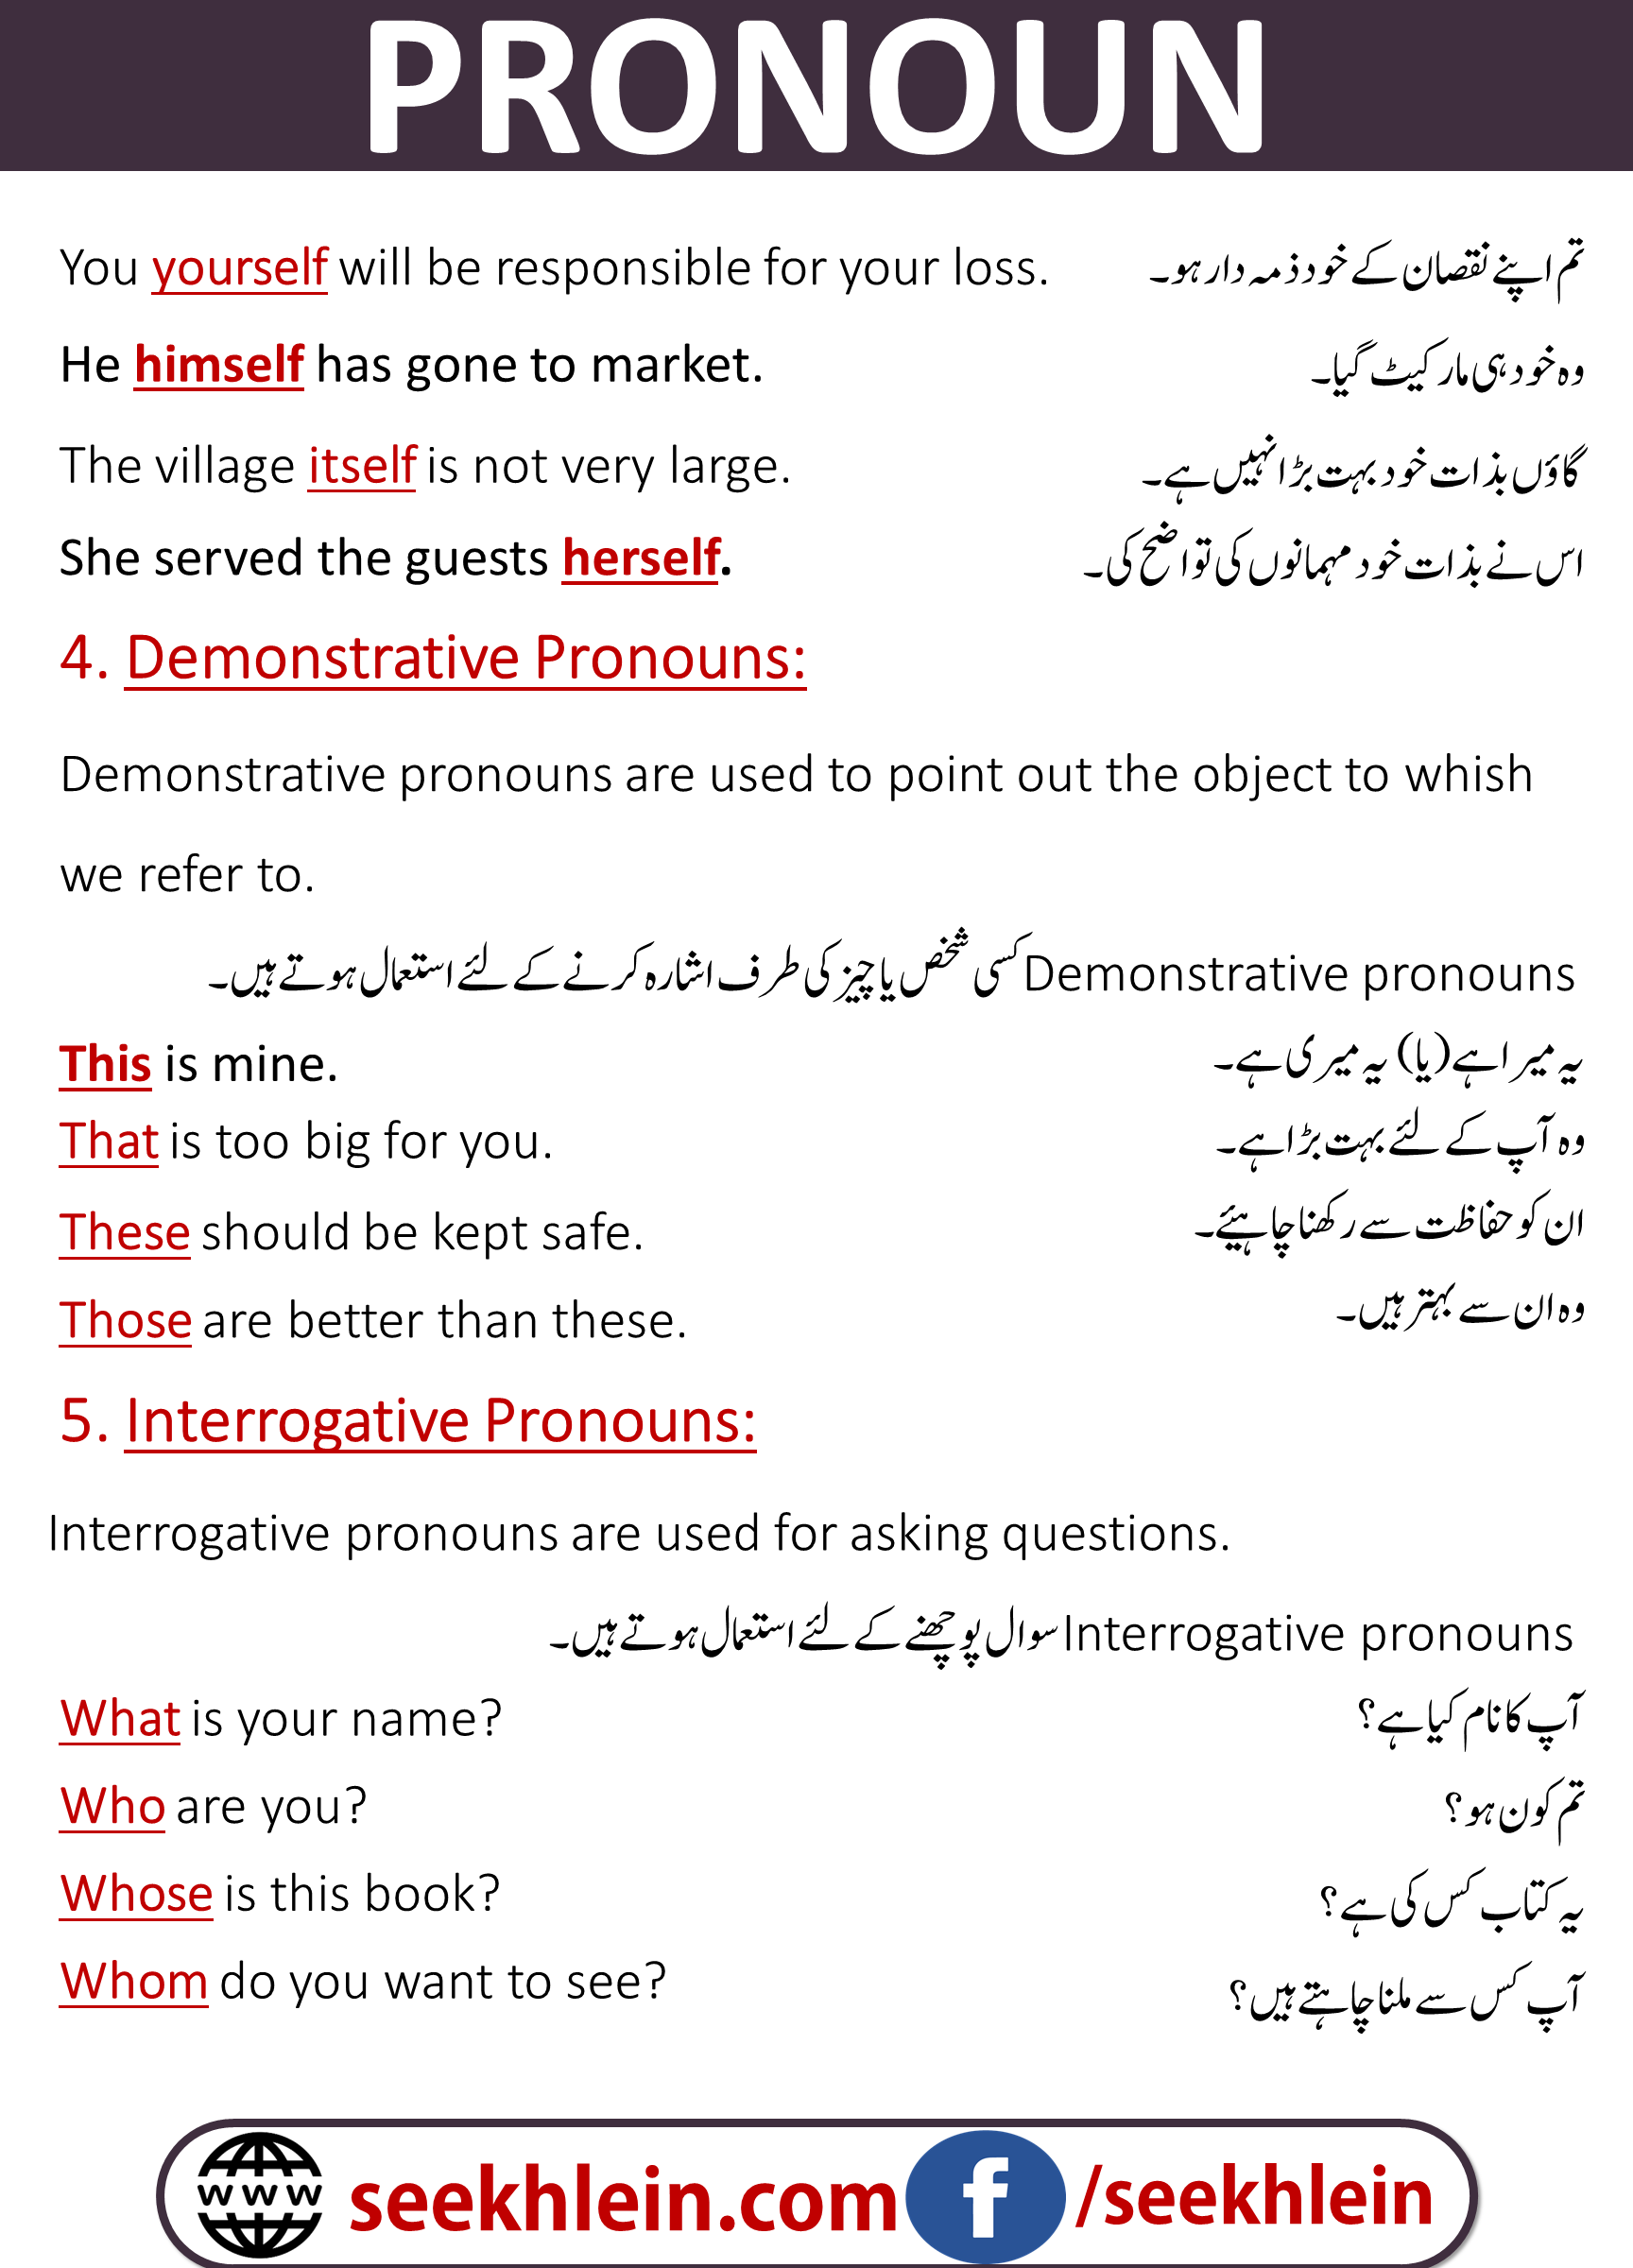 Pronoun Examples In A Sentence Demonstrative Pronouns